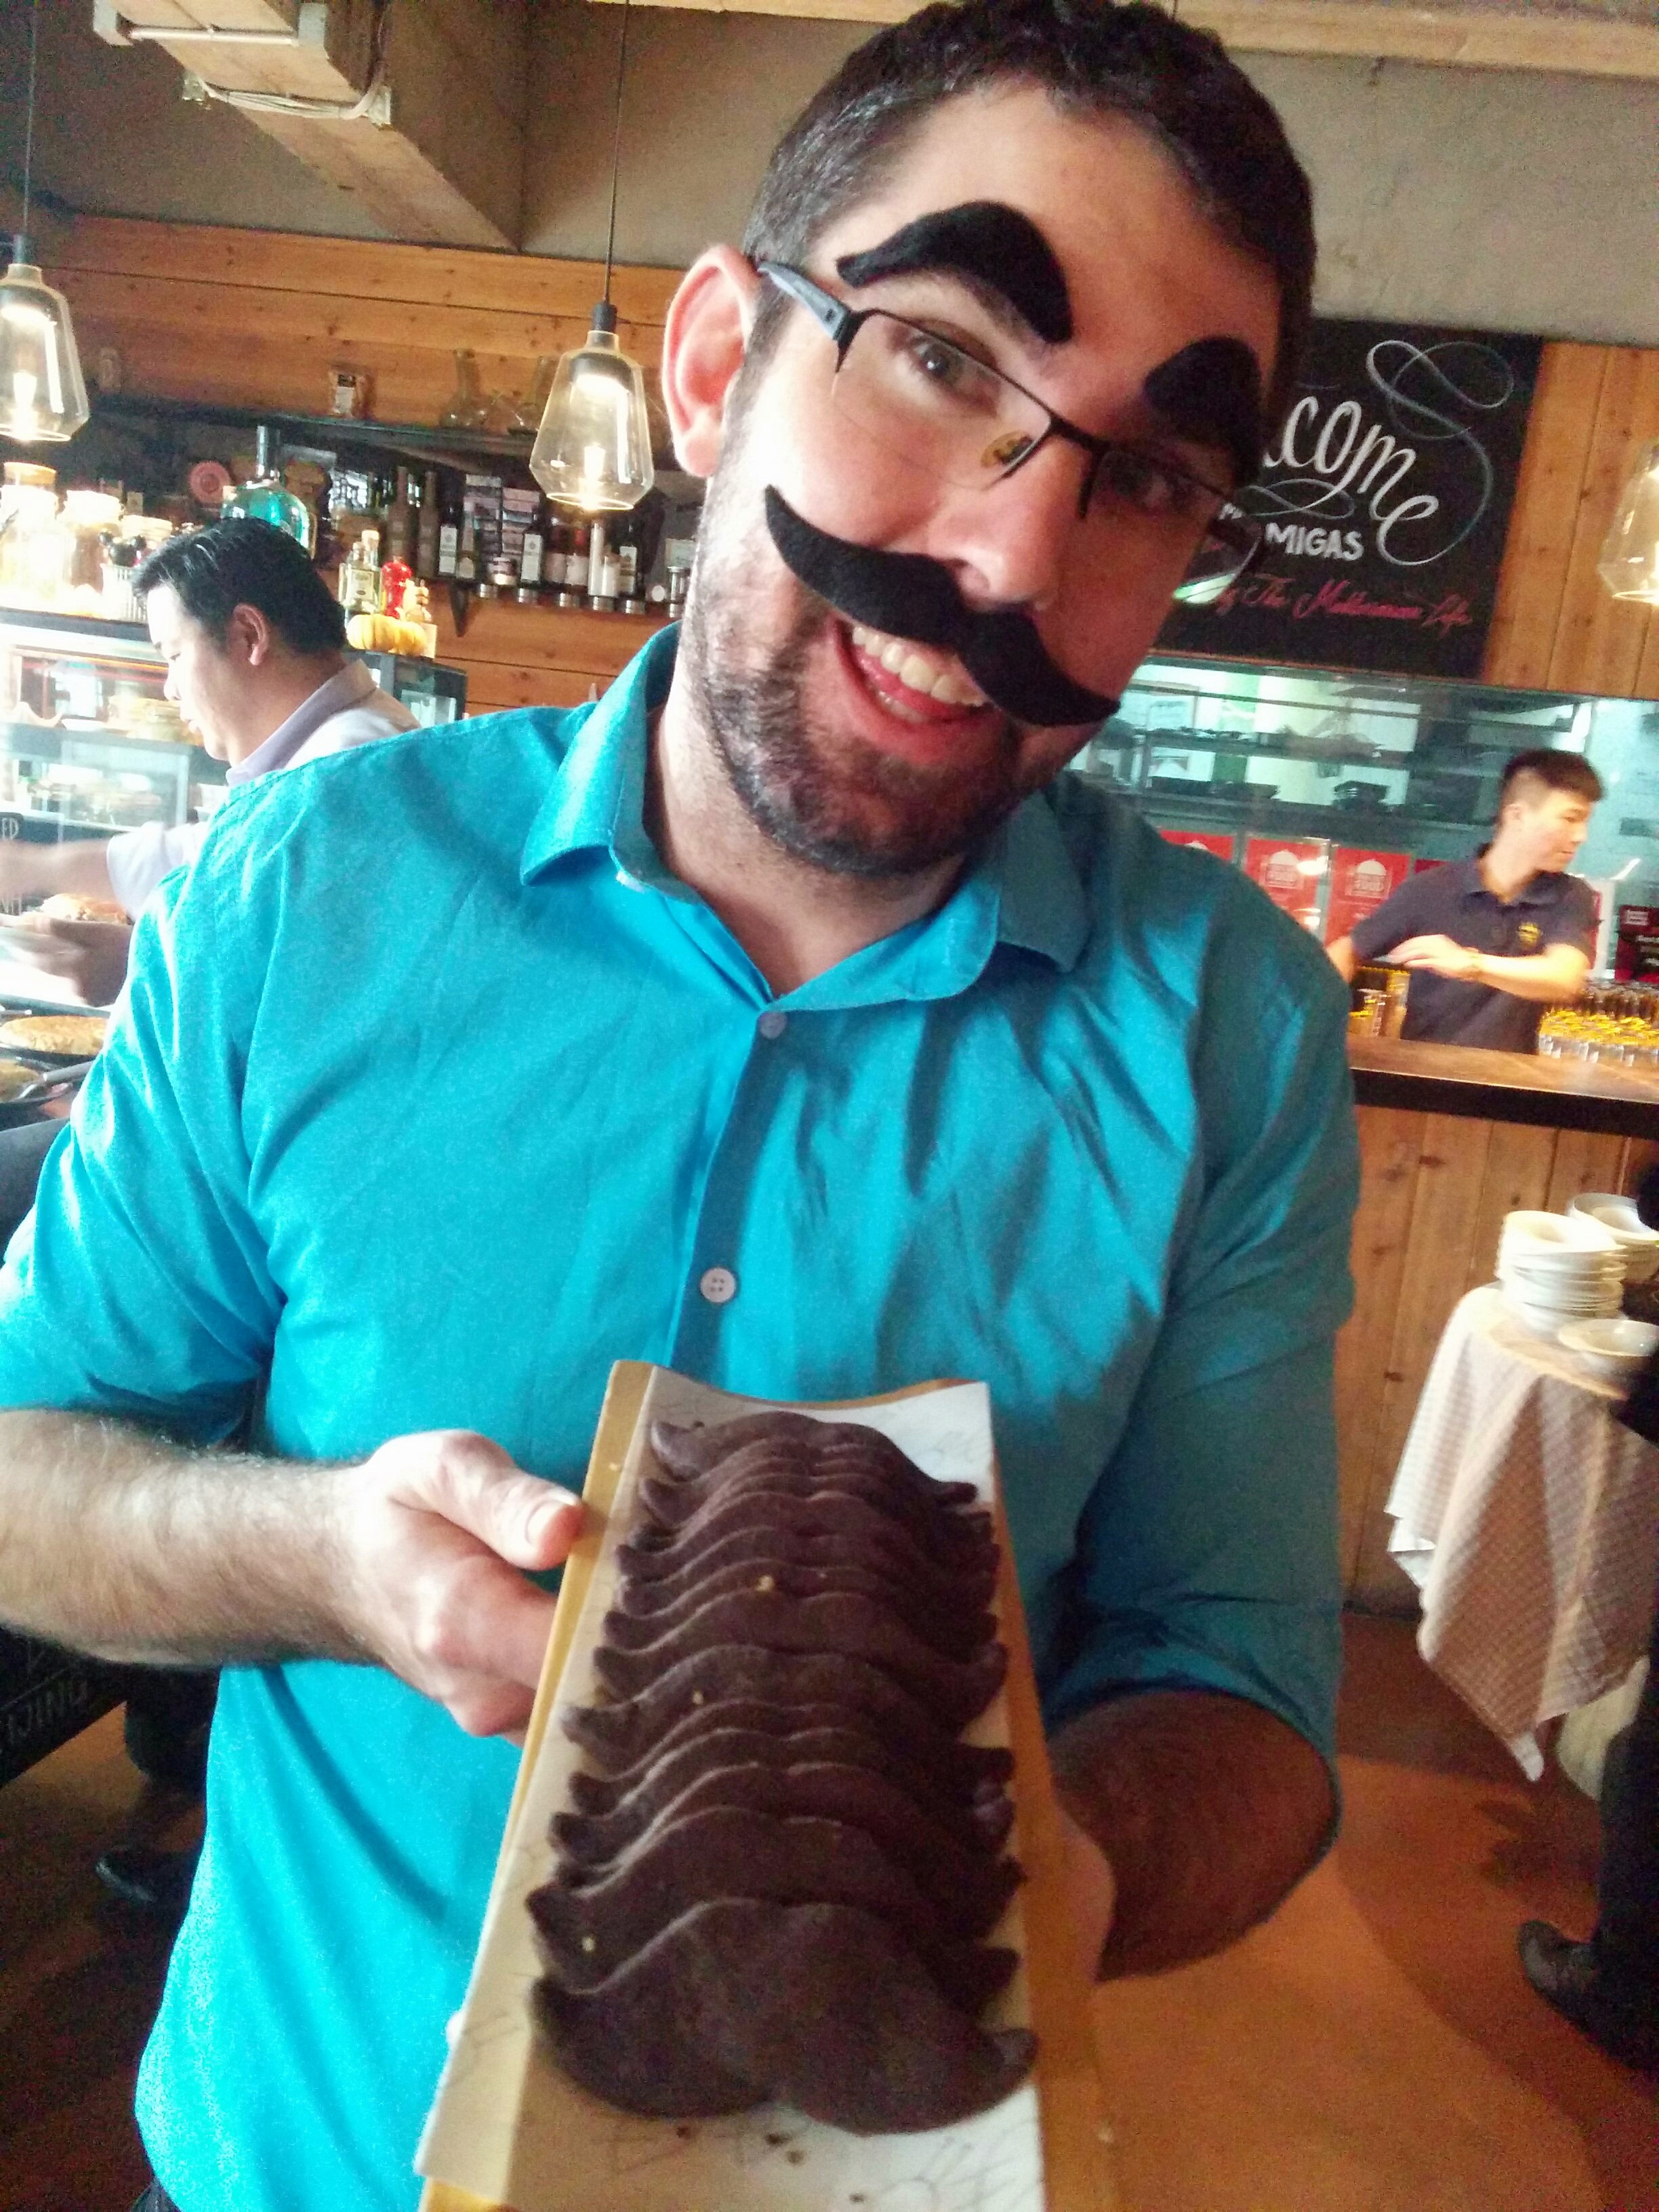 CD Maovember 2015 Juan Matas with mustache-shaped cookies at the Migas Maovember El Asador Brunch.